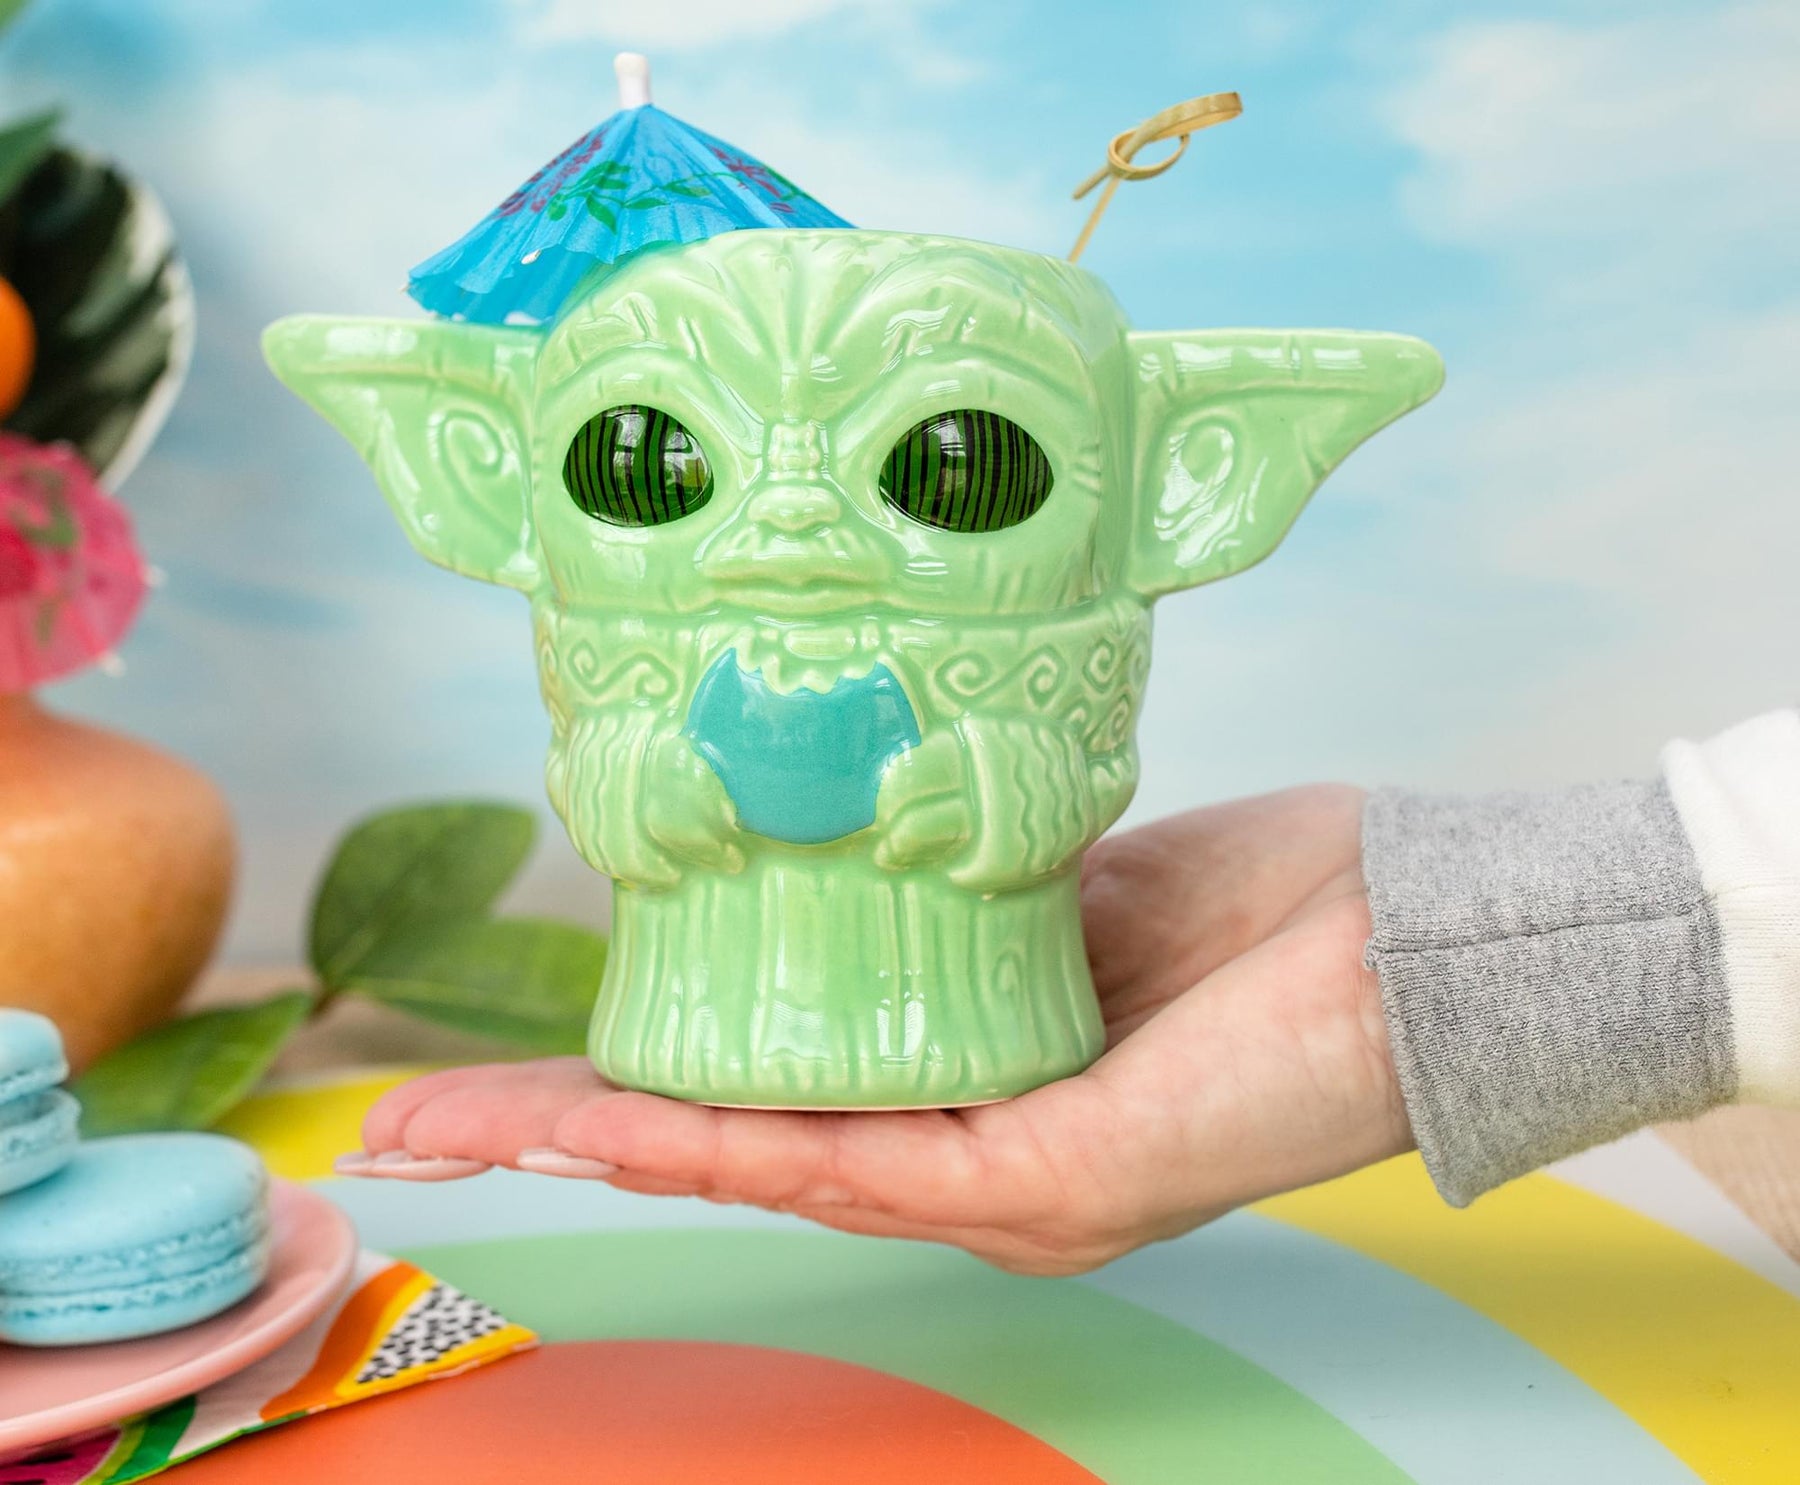 Geeki Tikis Star Wars: The Mandalorian Grogu with Cookie Ceramic Mug | 16 Ounces